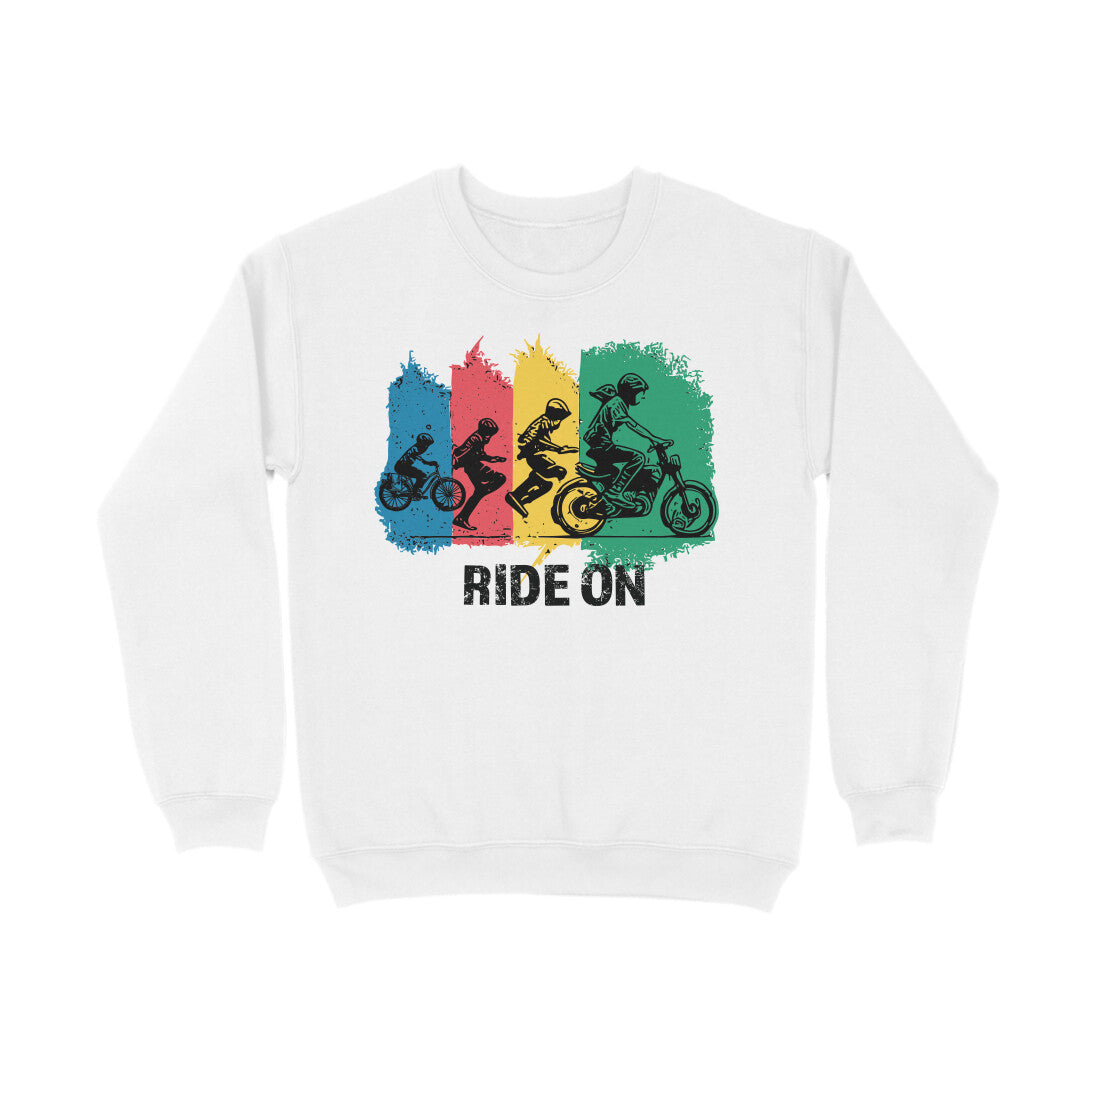 Bilkool Ride On Cotton Sweatshirt